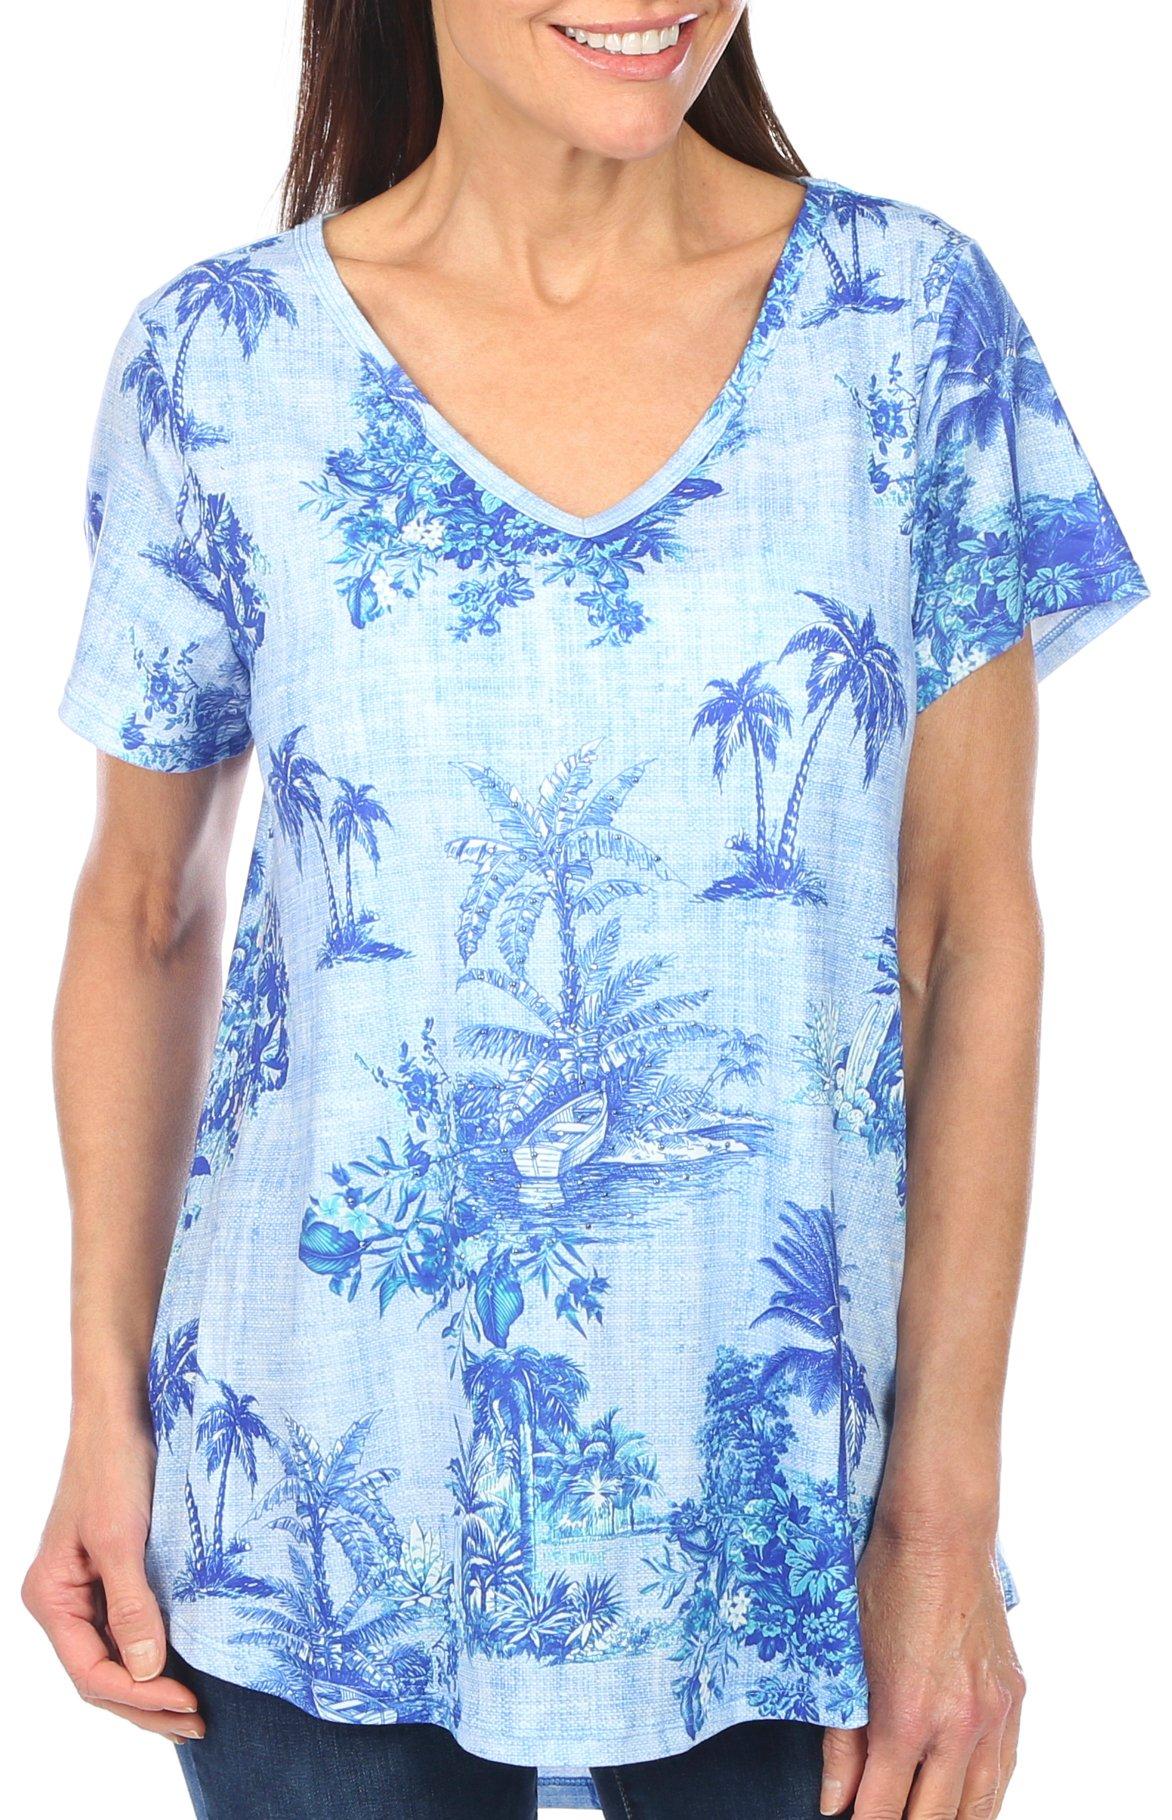 Coral Bay Womens Island Print Short Sleeve Top